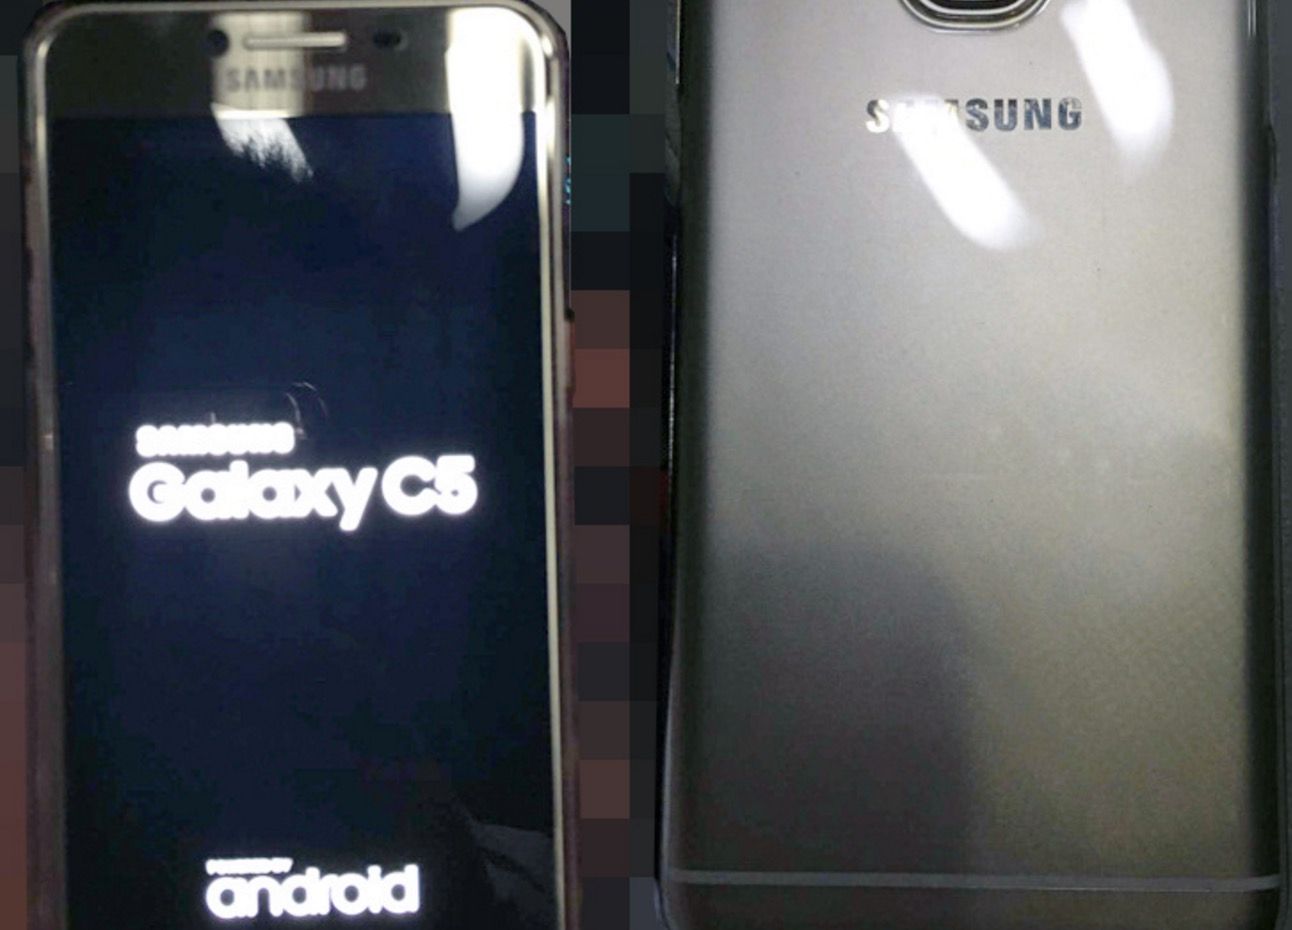 samsung galaxy c5 leak shows mid range smartphone with metal body image 1